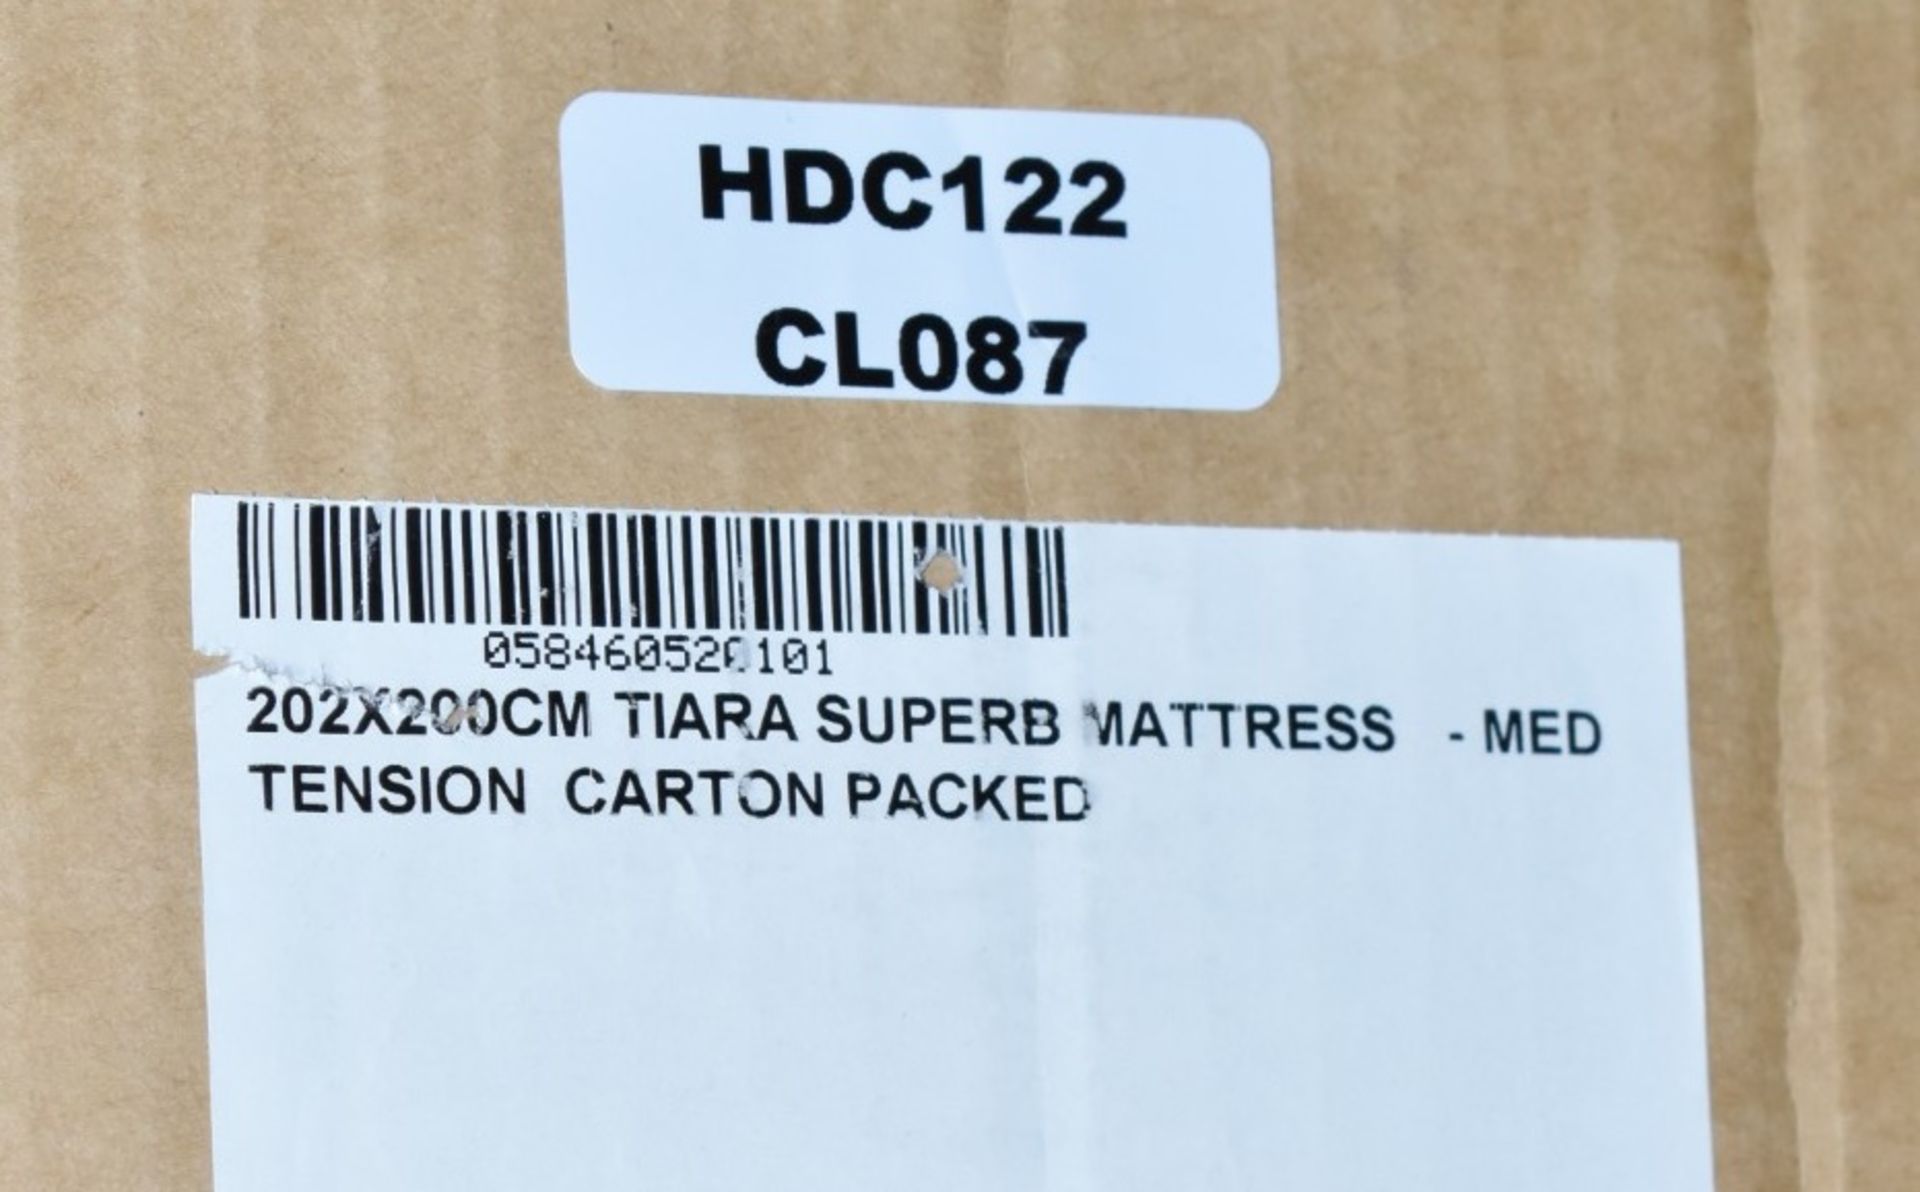 1 x VISPRING 'Tiara Superb' Emperor Mattress With Sovereign Divan Bed Base - Original RRP £9,300 - Image 5 of 6